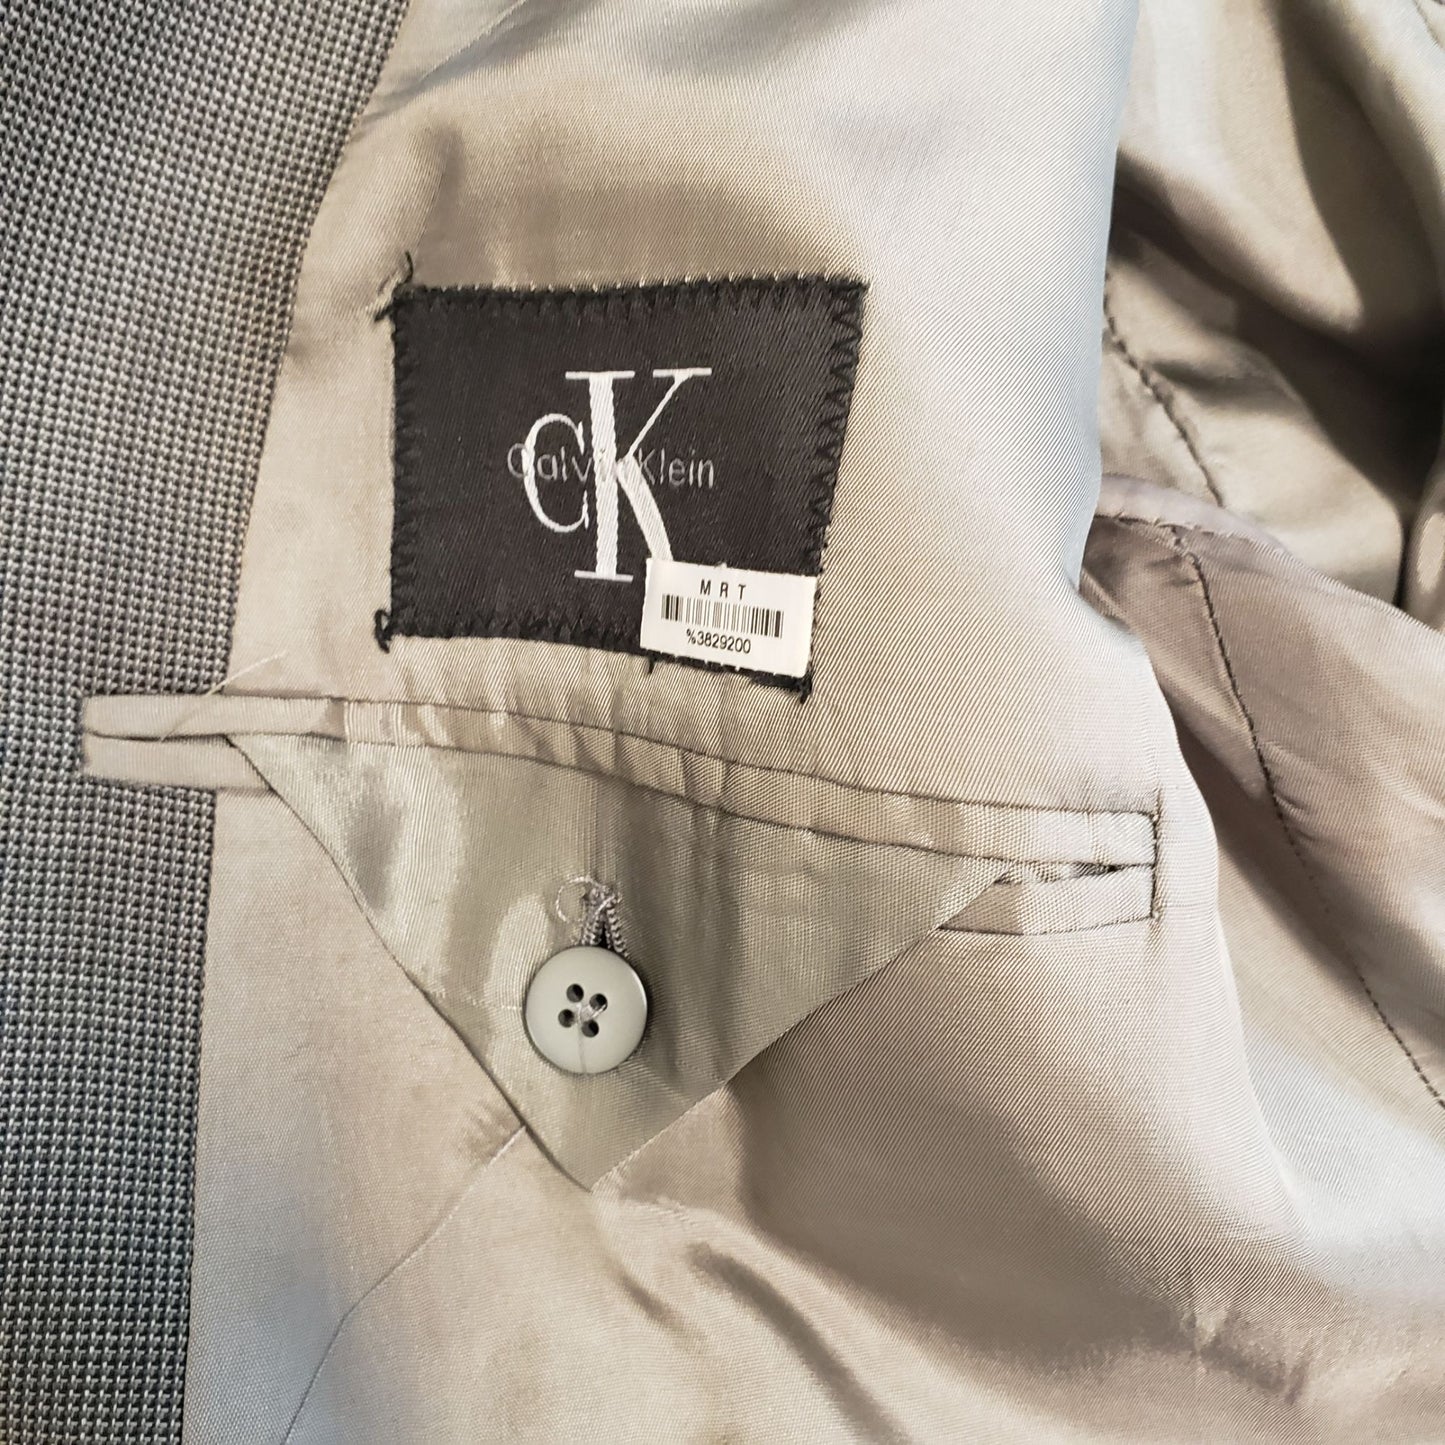 Calvin Klein Wool 3 Button Suit Jacket Size 44R